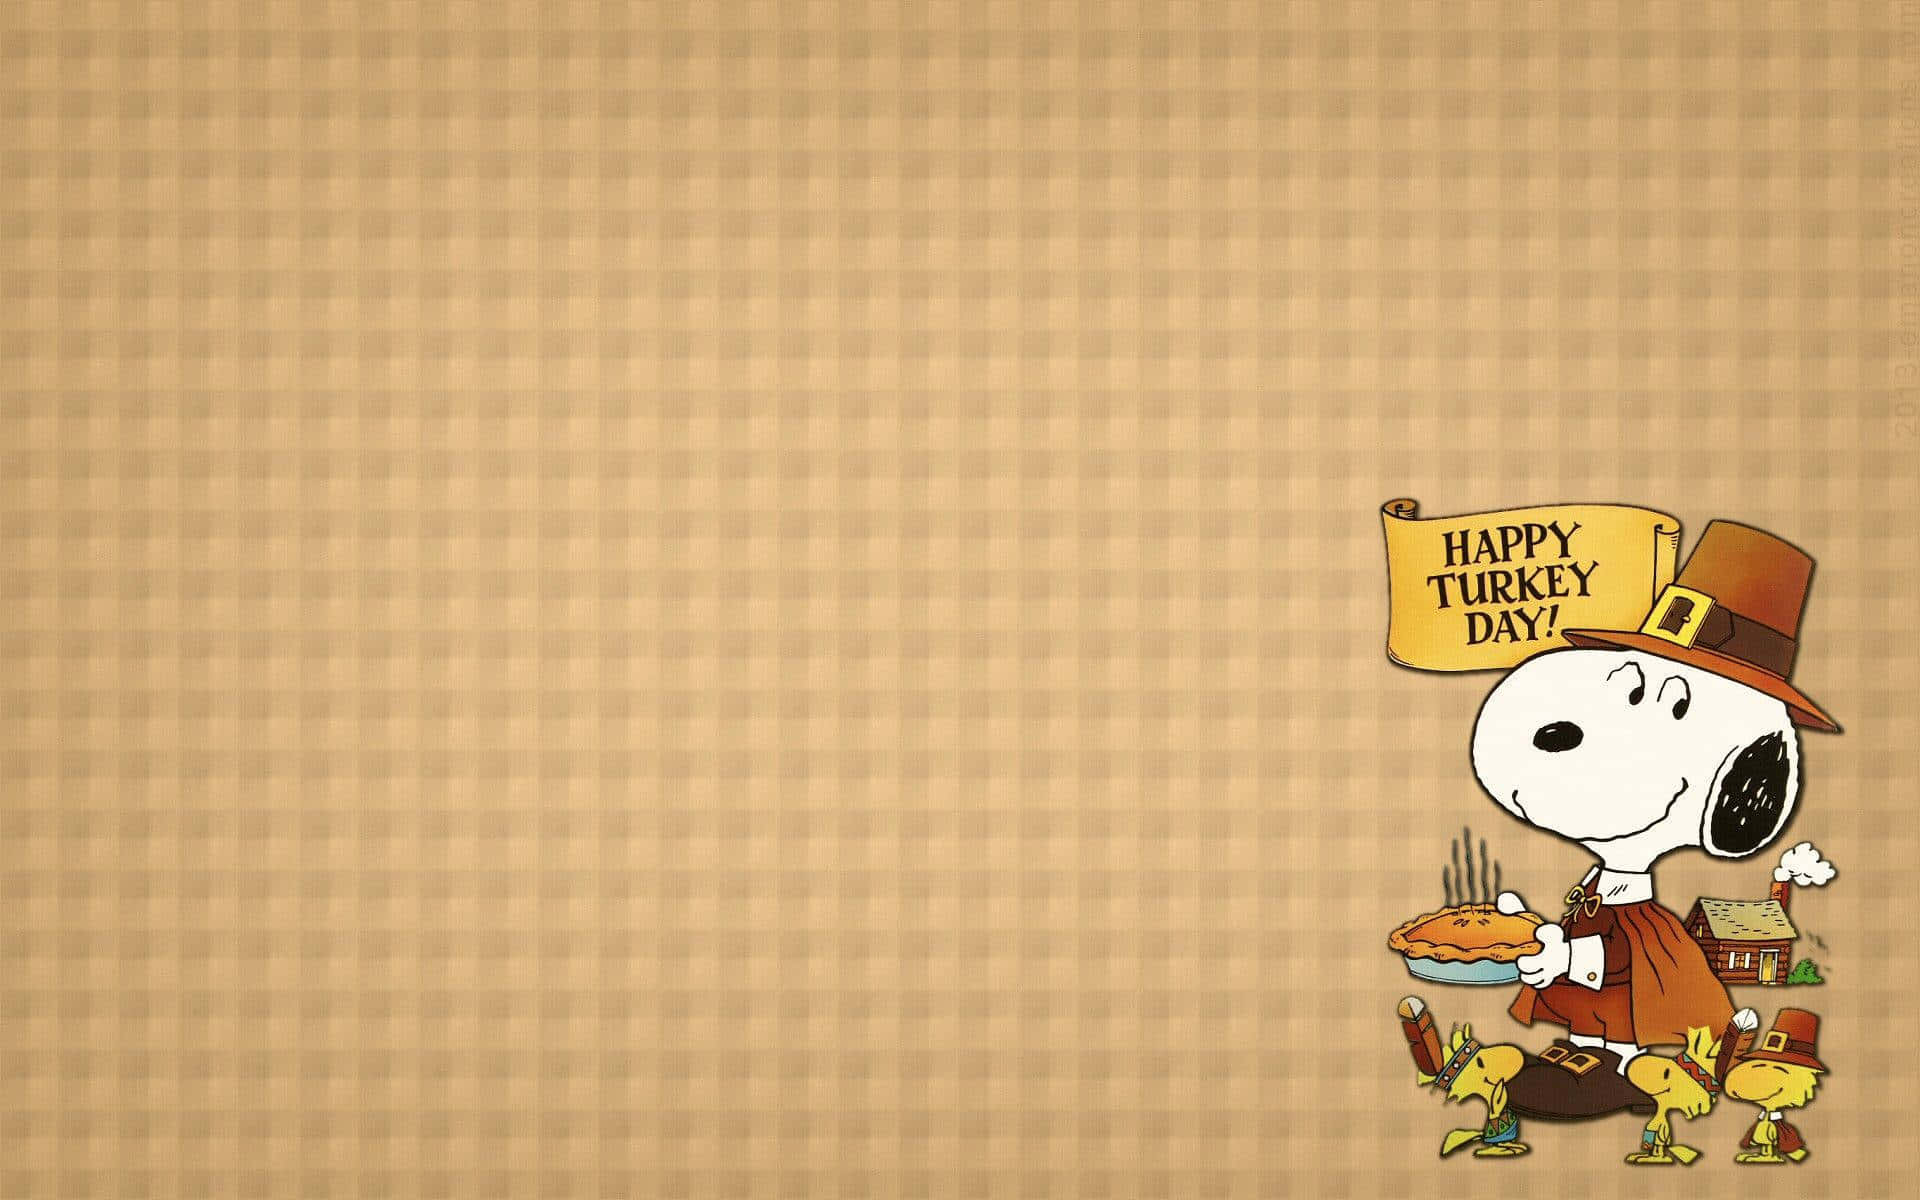 Lad os fejre Thanksgiving-ferien med Snoopy og venner. Wallpaper